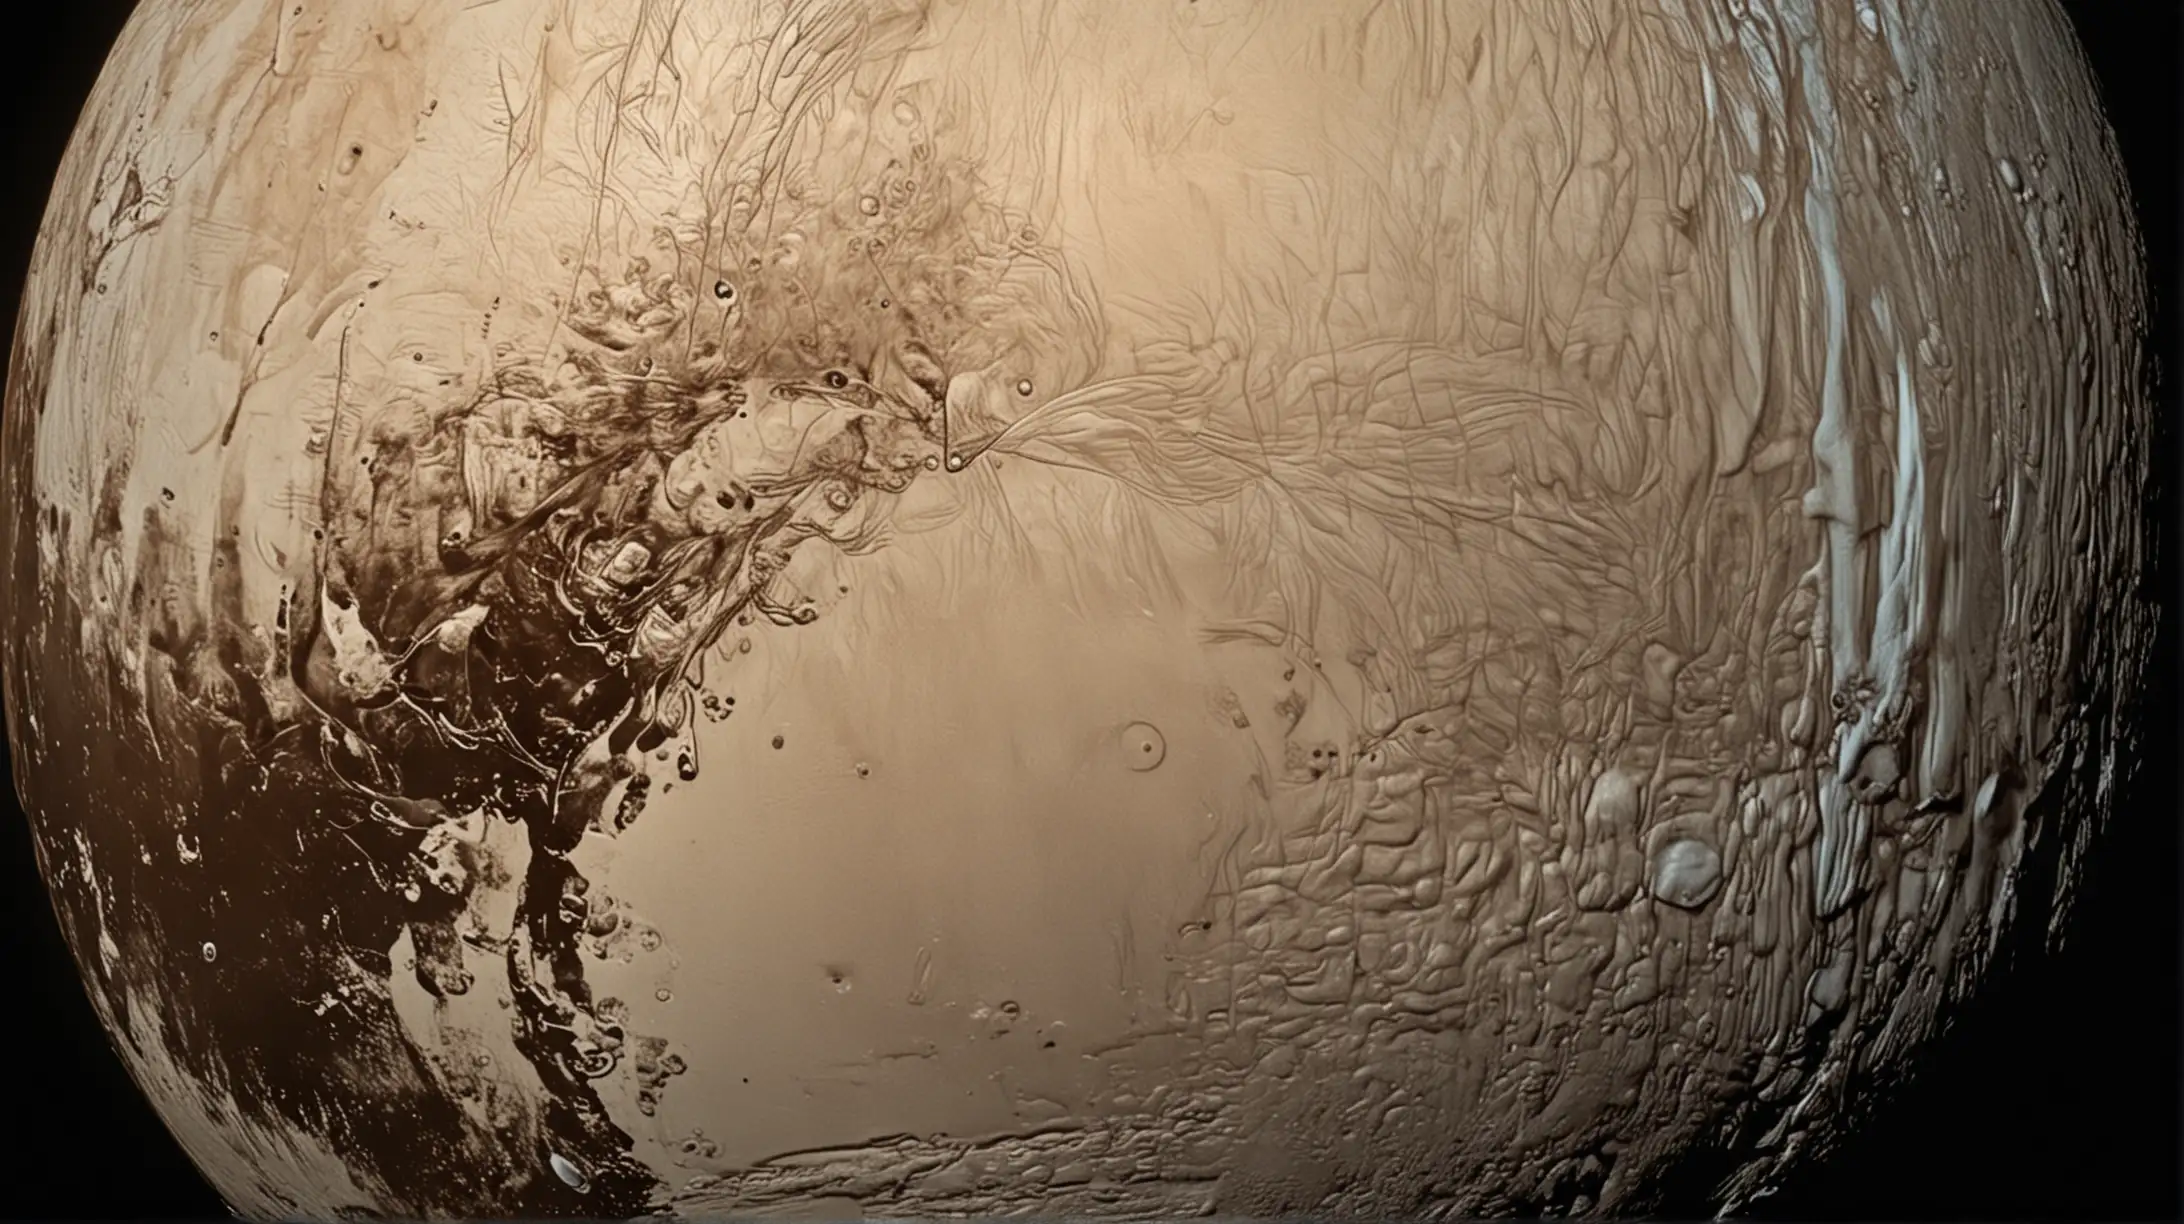 Pluto, viewed from orbit